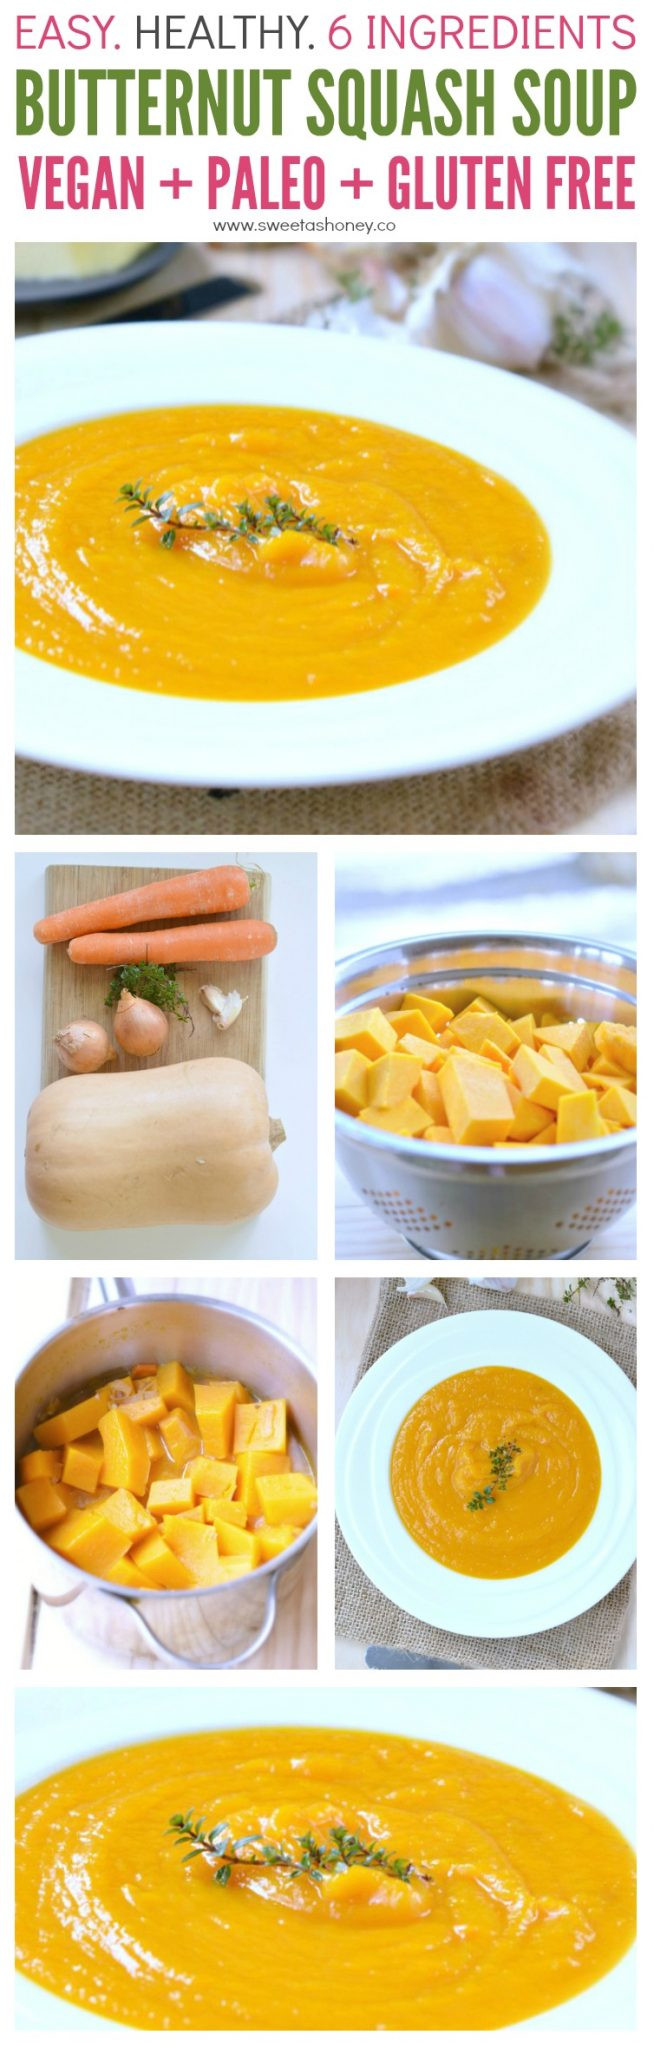 Low Calorie Butternut Squash Recipes
 Butternut Squash Carrot Ginger Soup